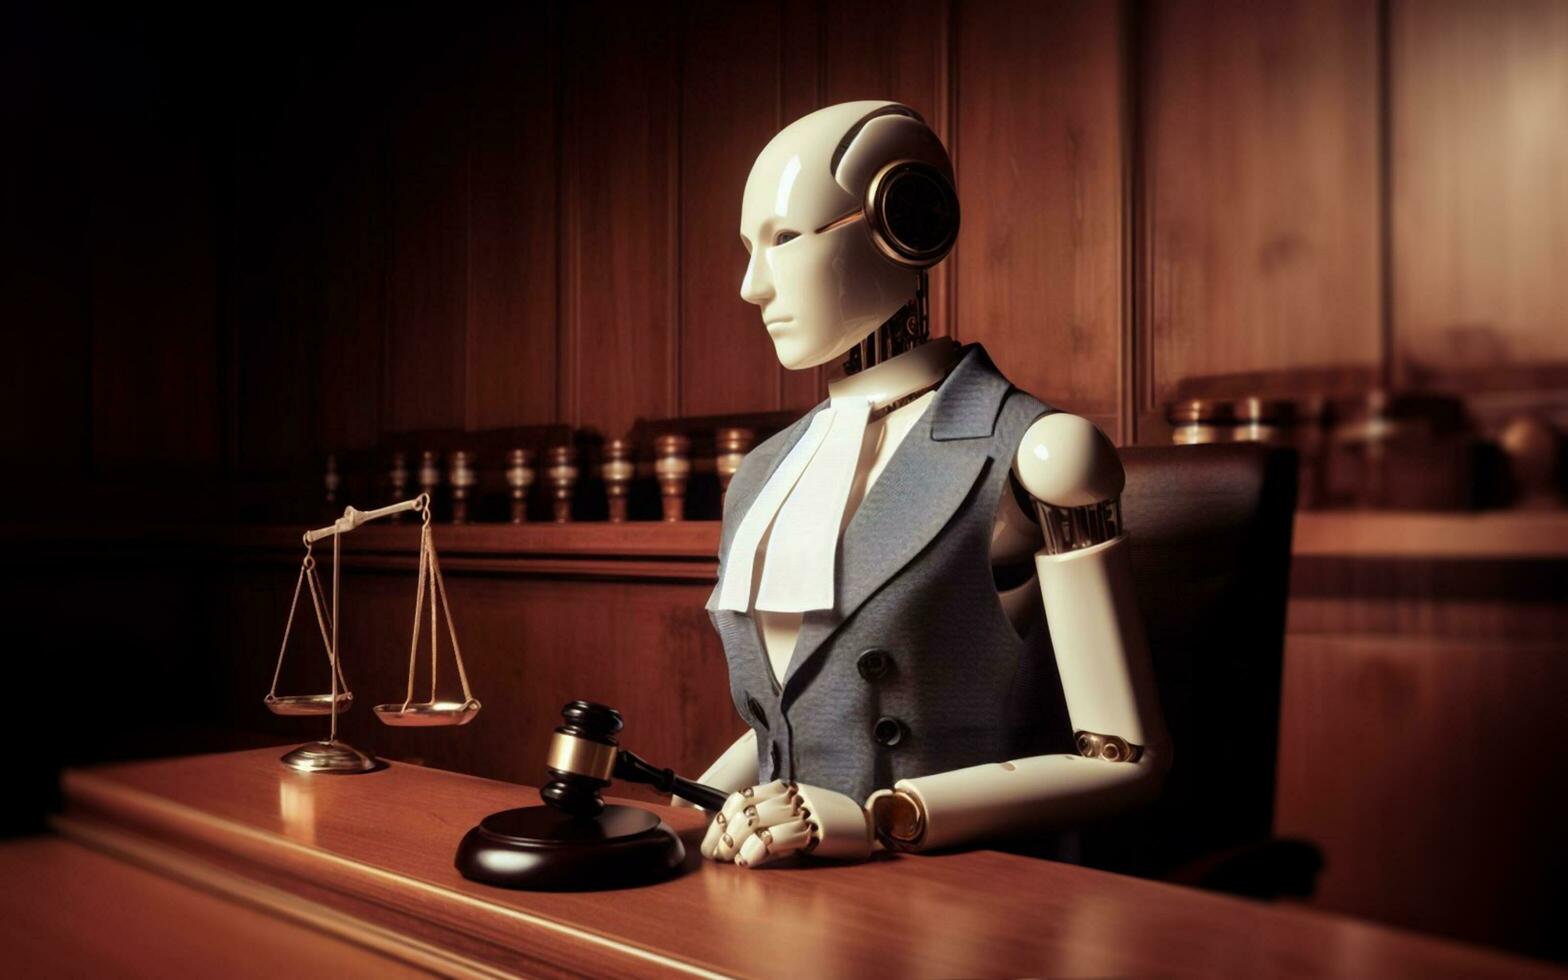 ai generado ai robot juez decide casos moderno judicial sistema juez con automatización desde androide foto